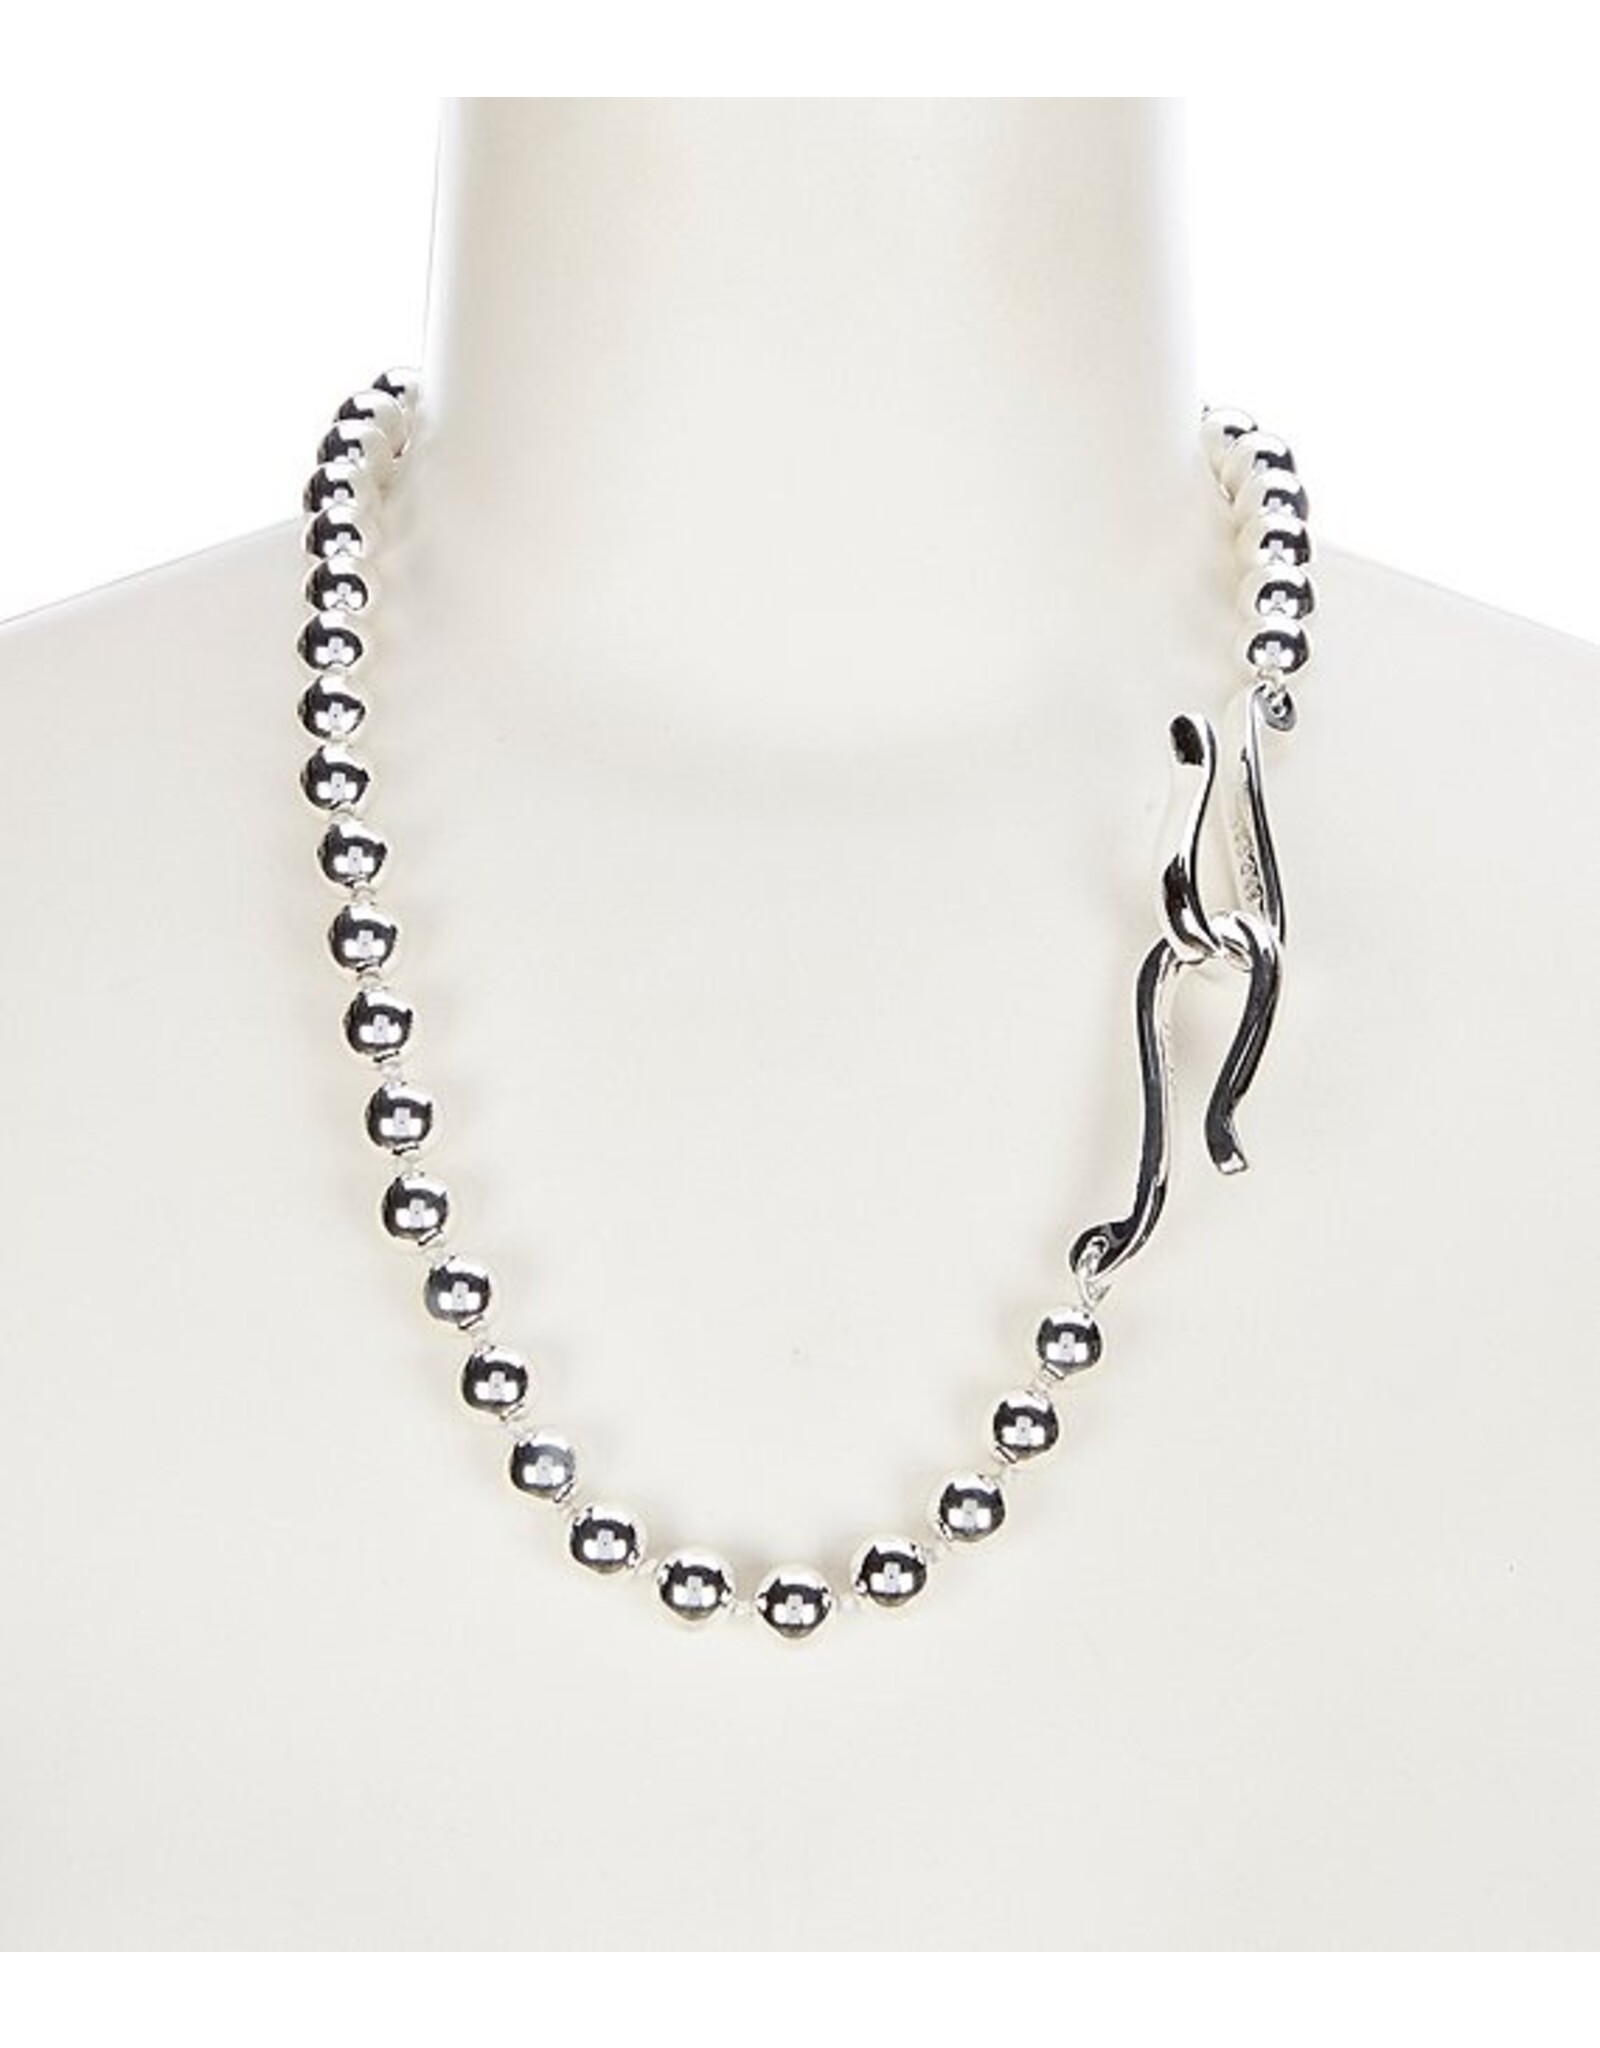 Simon Sebbag Designs Simon Sebbage Necklace Sterling Silver Hematite with Hooks